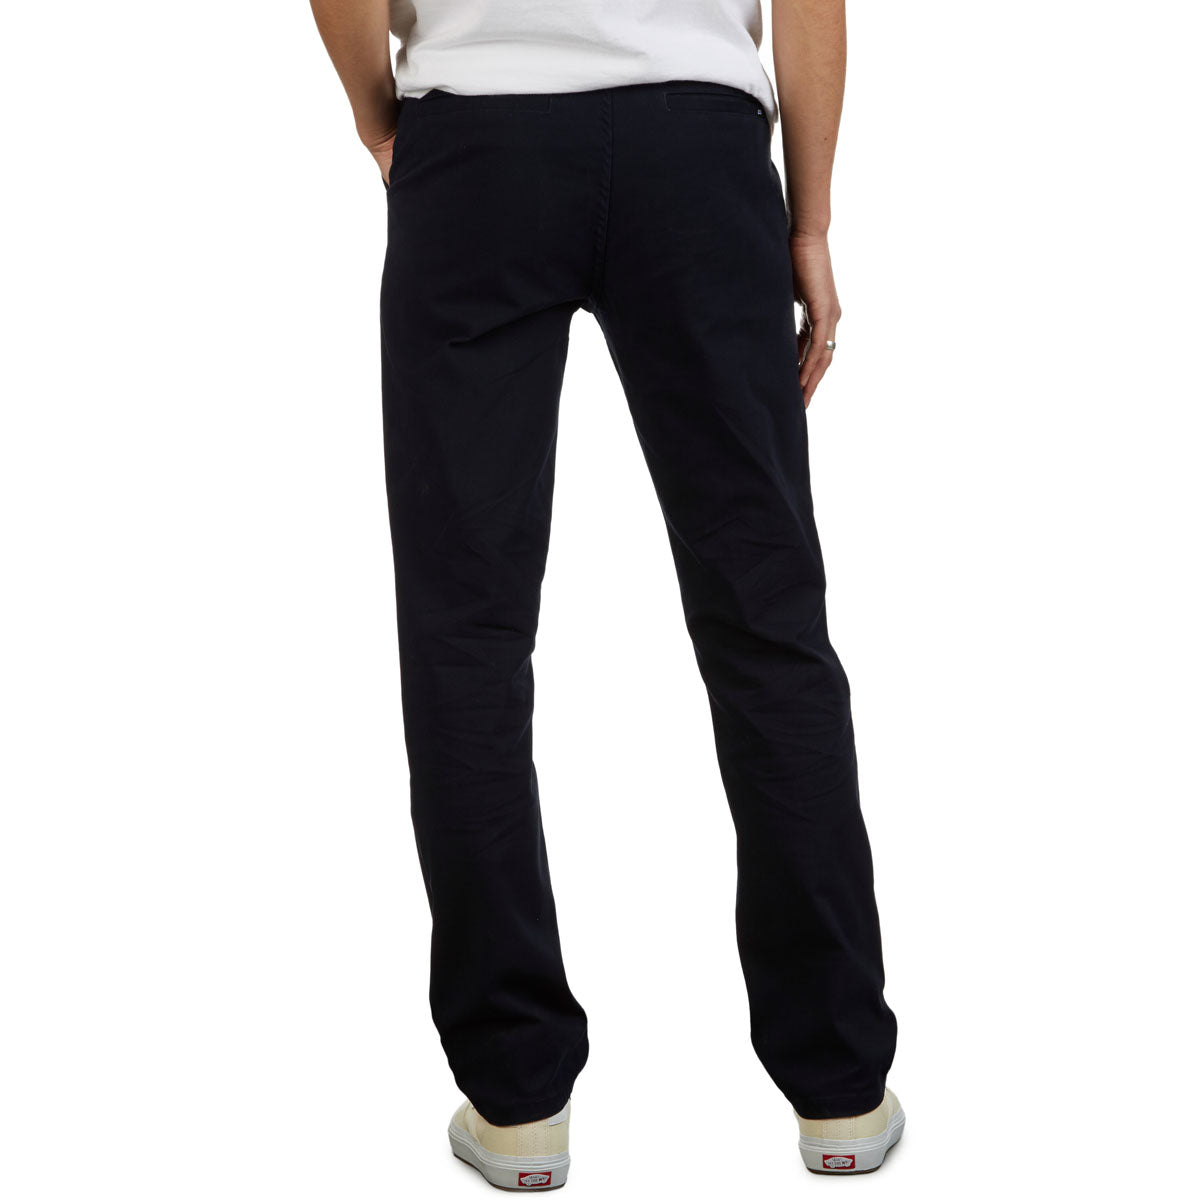 CCS Standard Plus Slim Chino Pants - Navy image 3